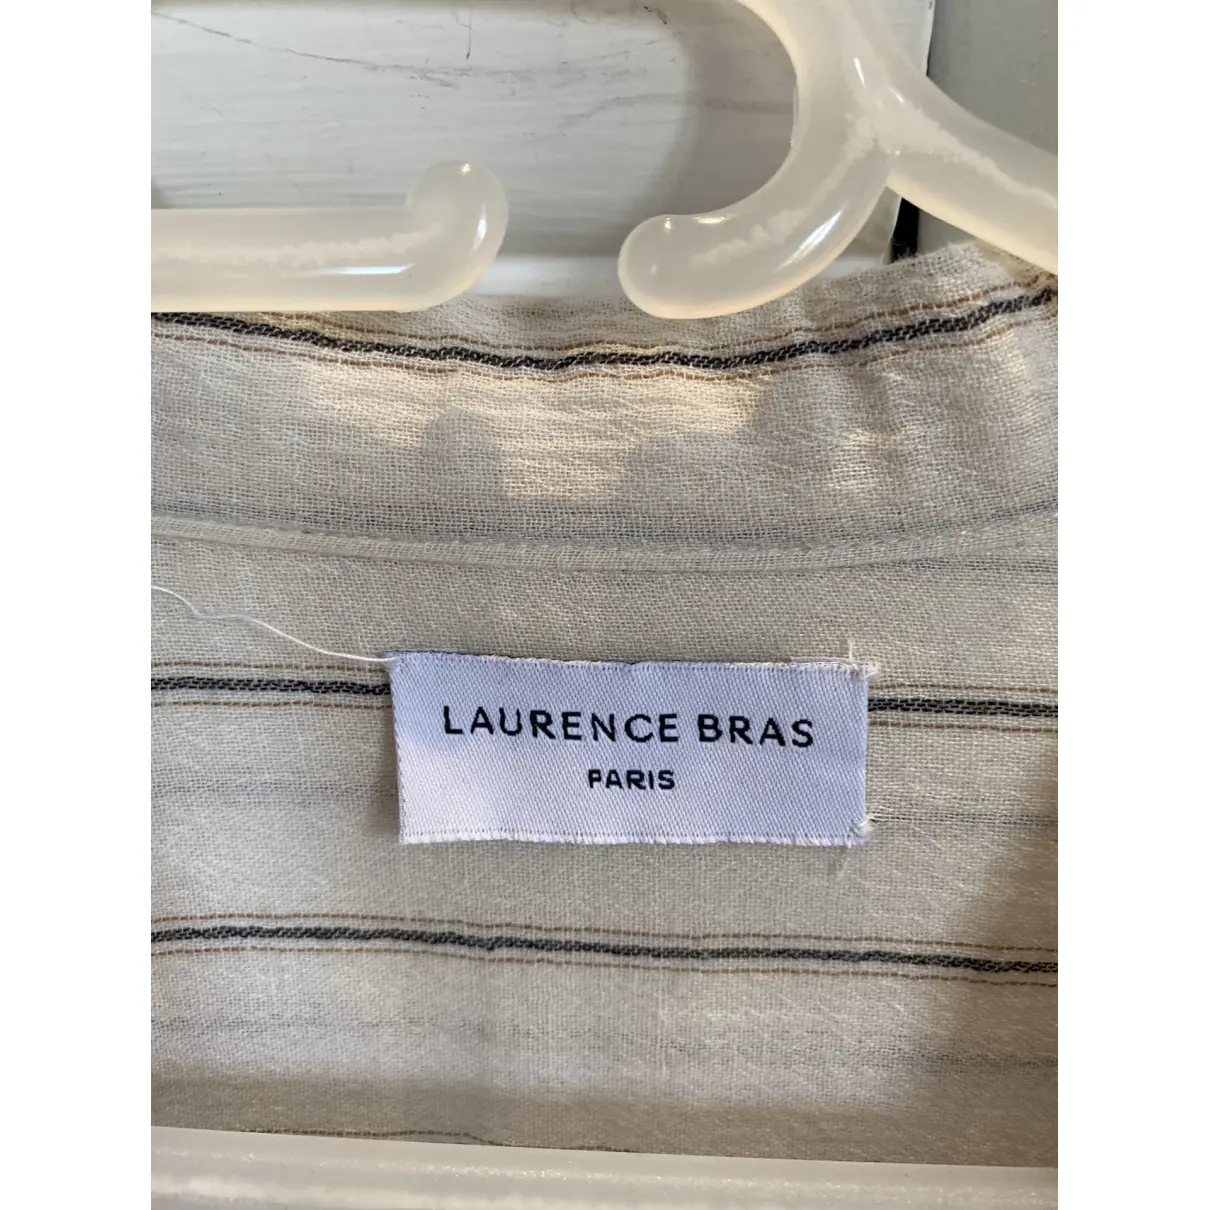 Buy Laurence Bras Blouse online